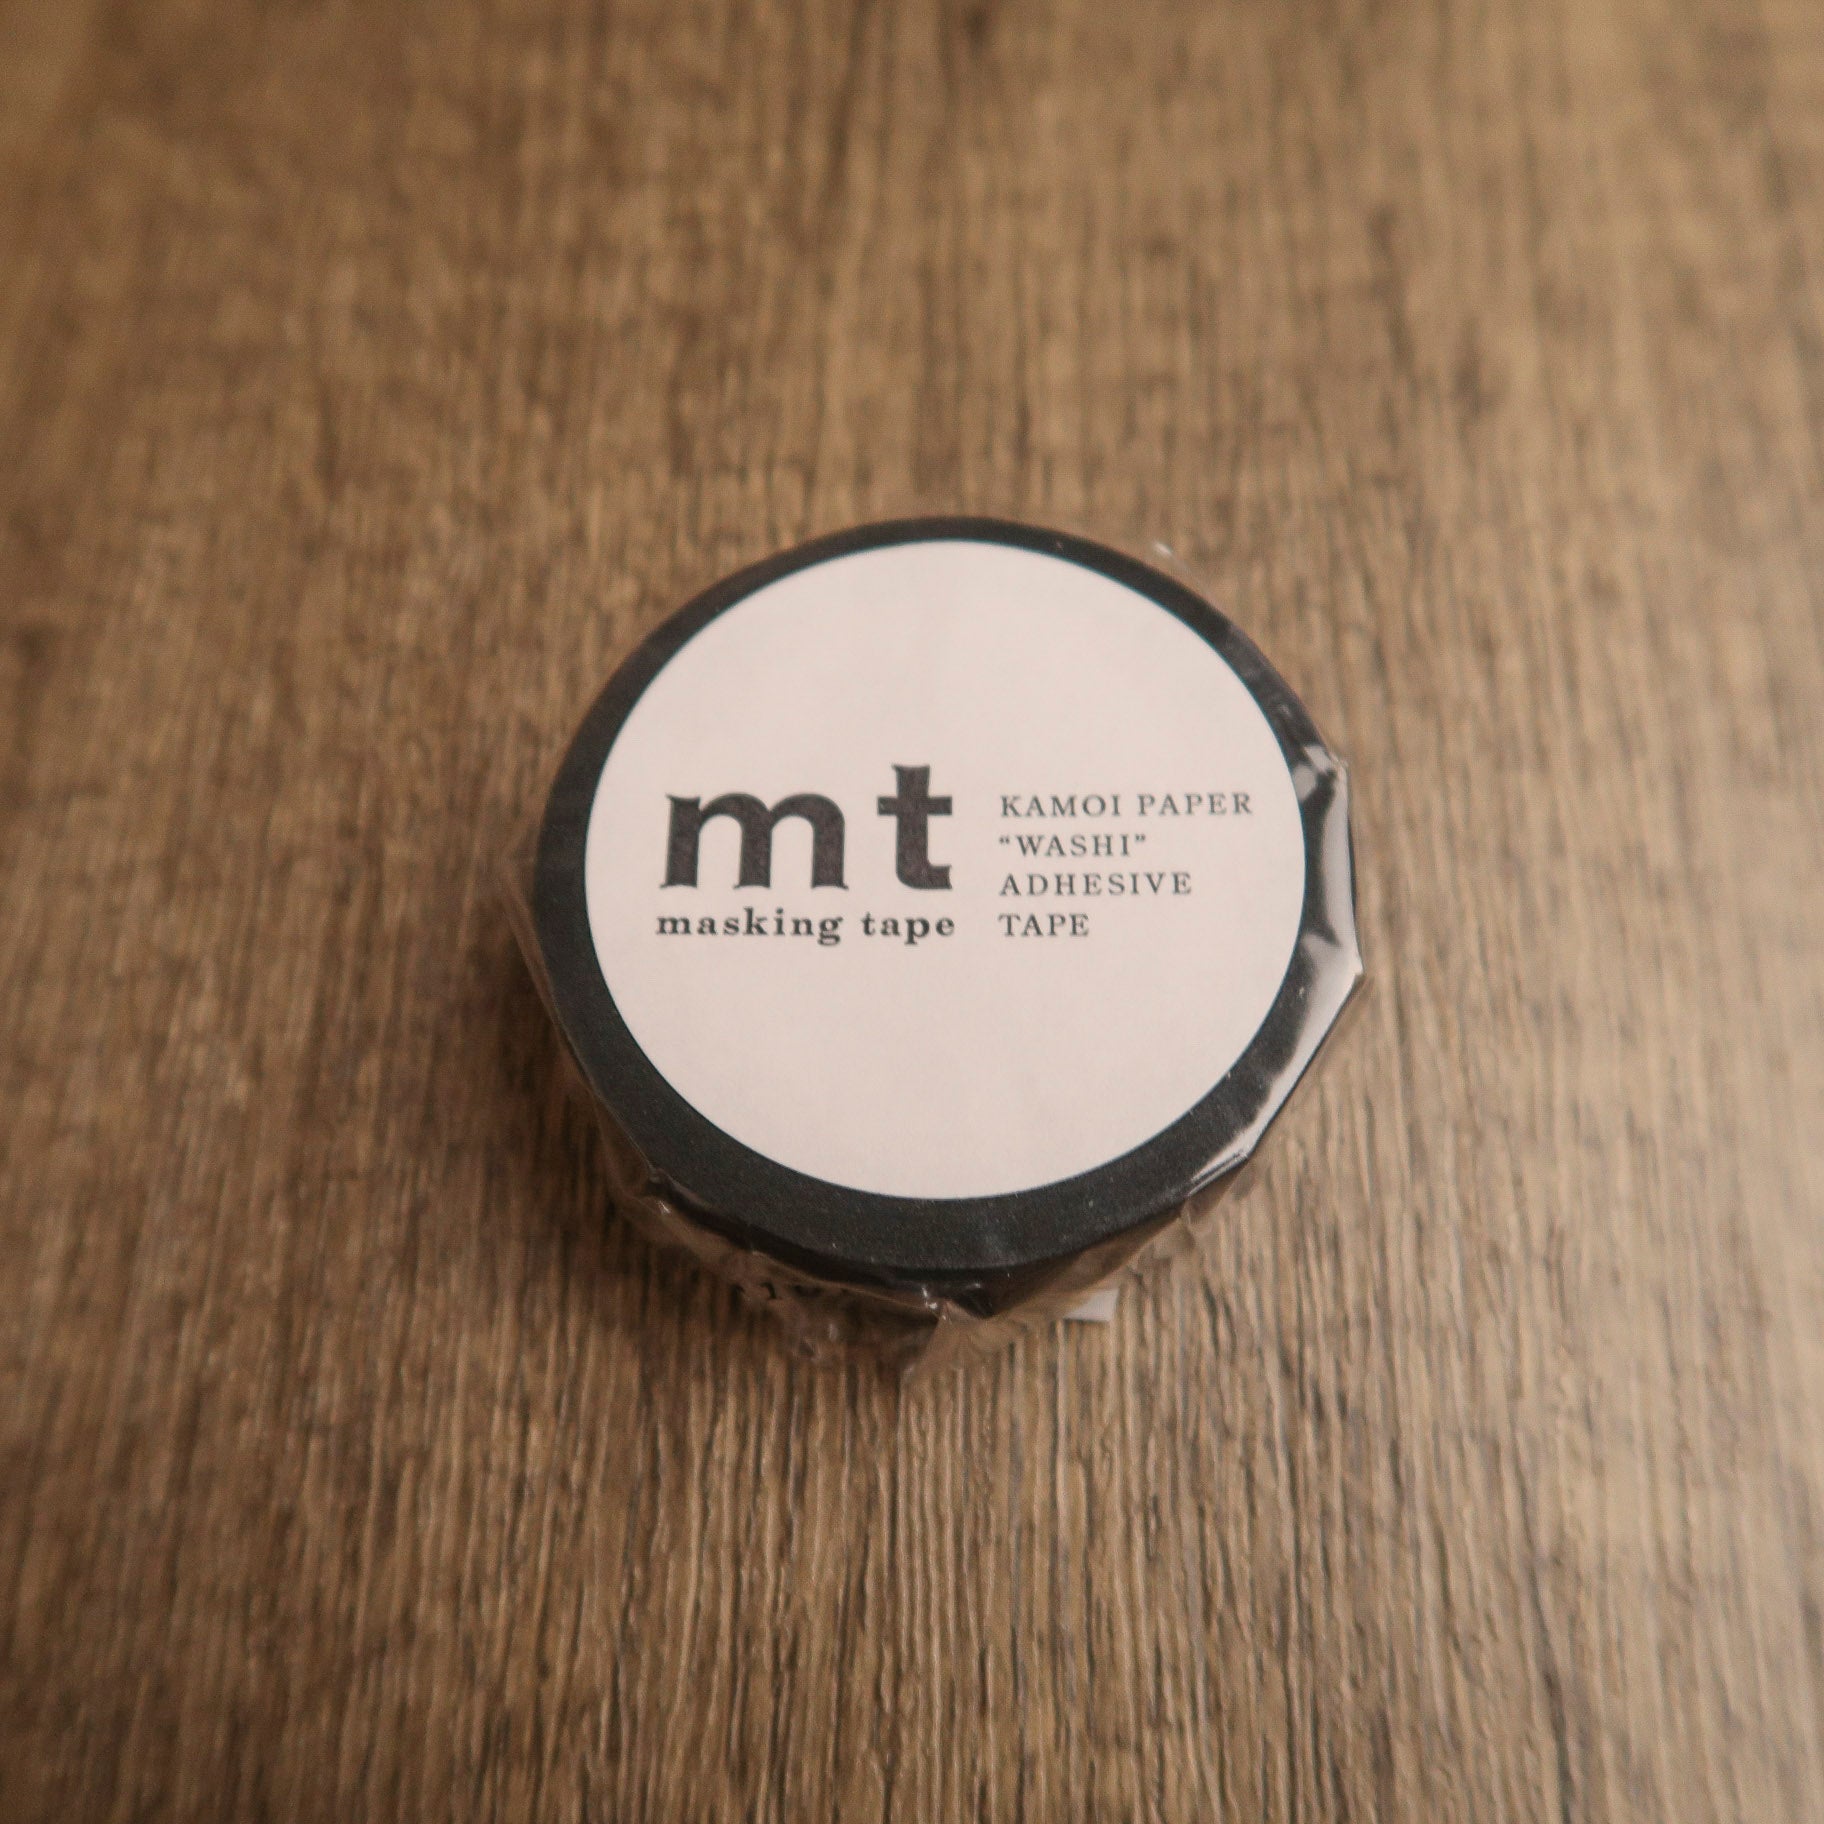 mt Masking Tape (Kamoi Paper "Washi") - Mi Spacium Design Studio - 精選文具 Selected Stationery